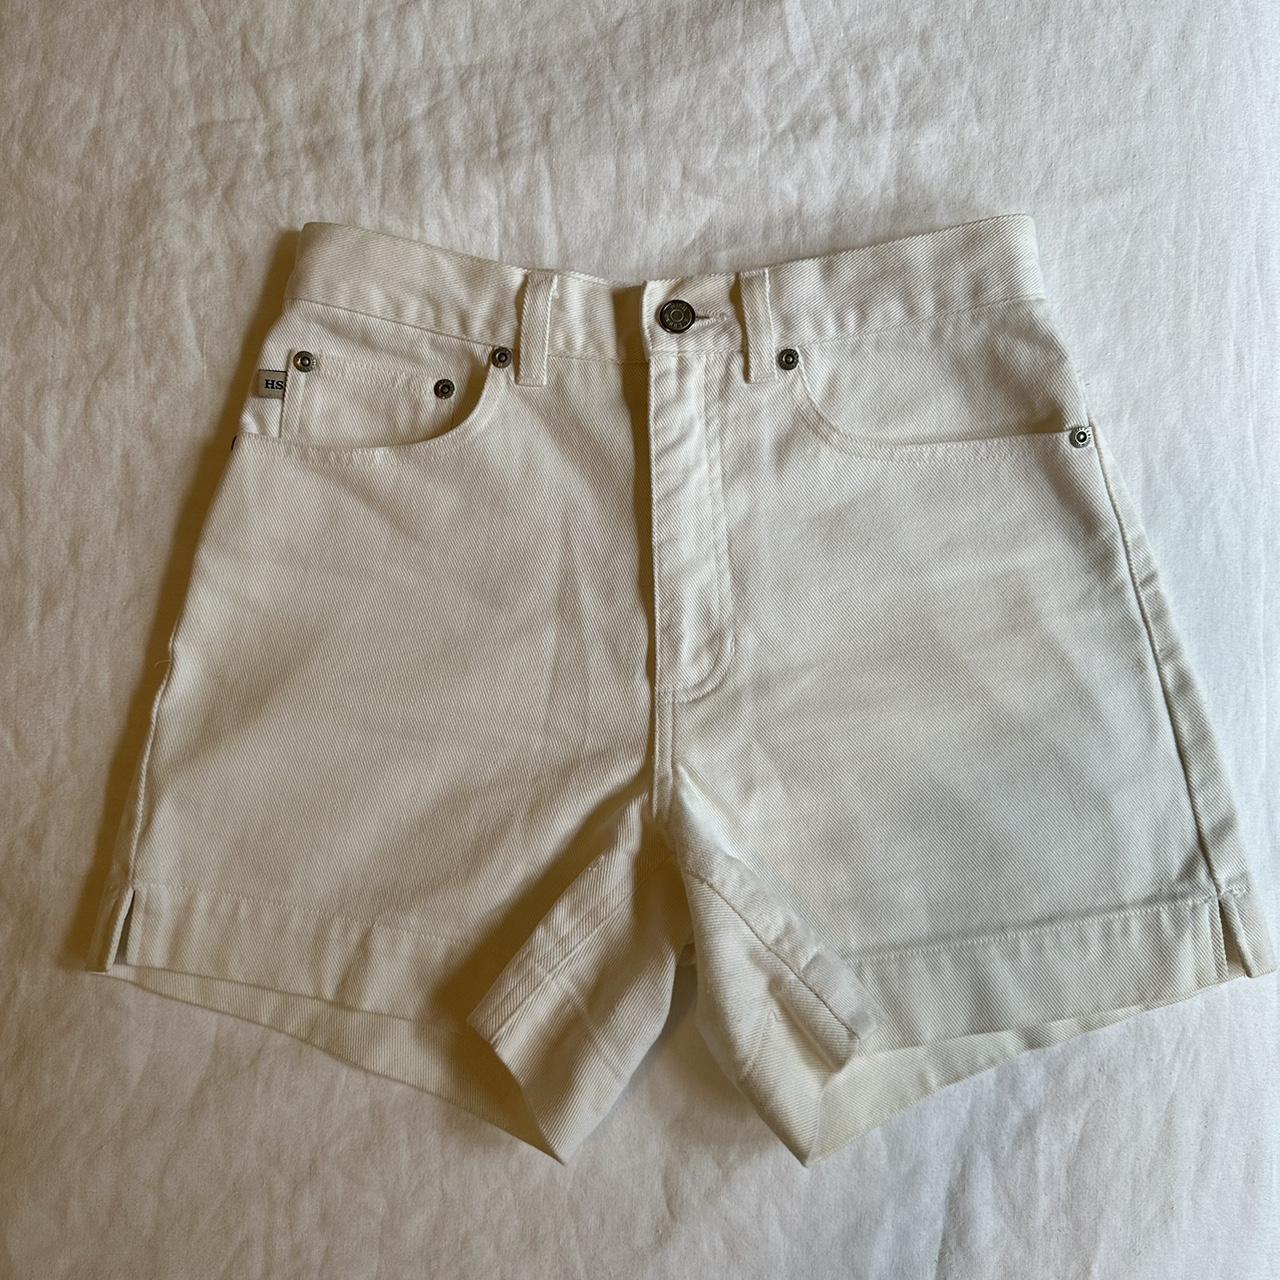 High Sierra Women's White Shorts